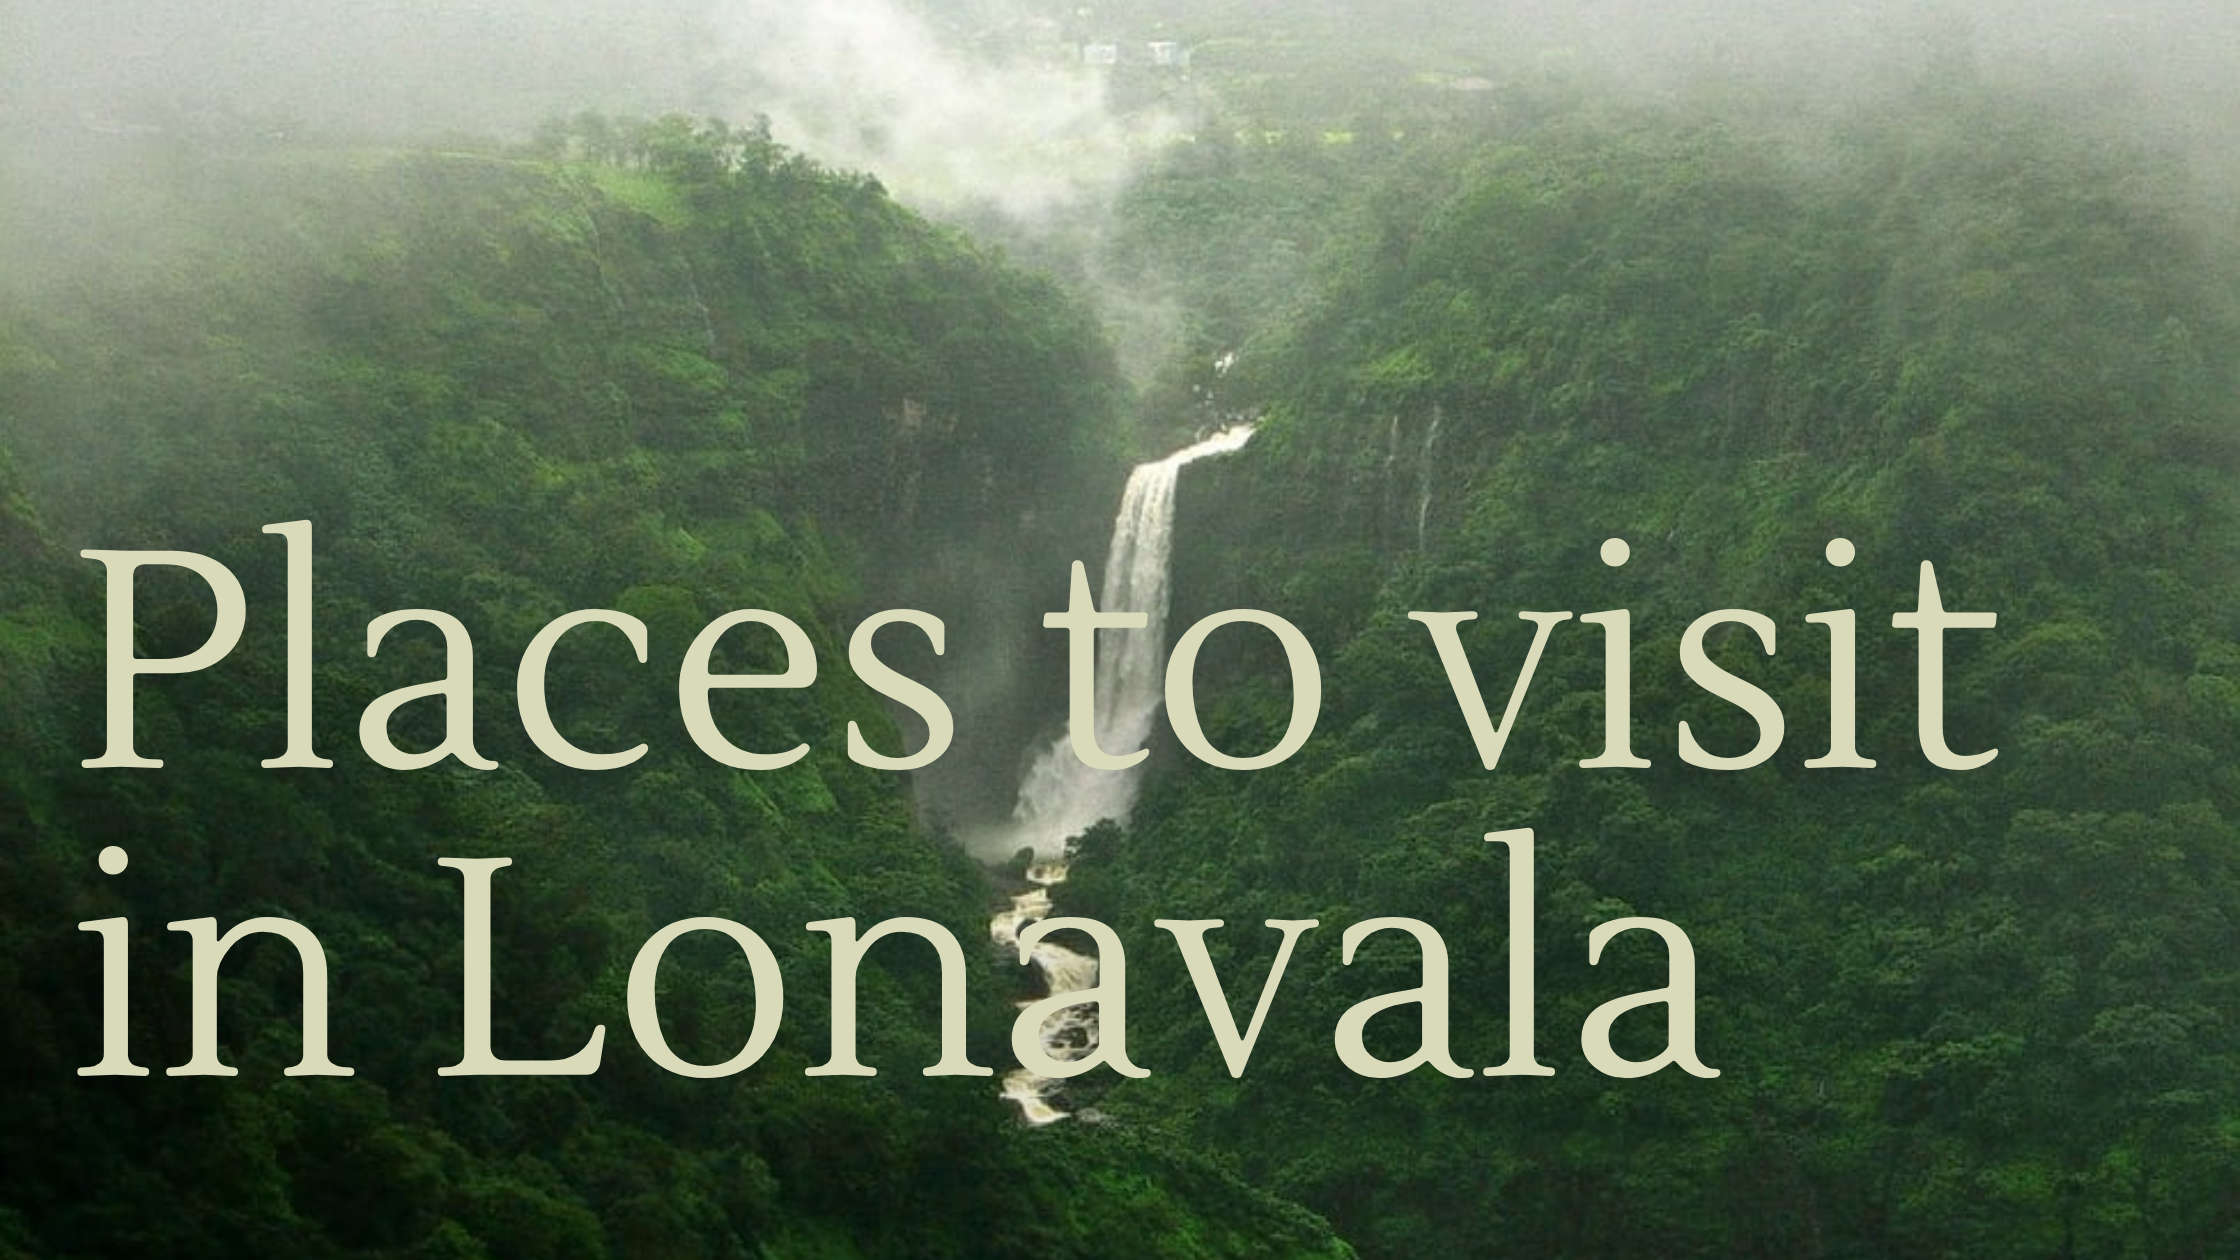 Places to visit in Lonavala